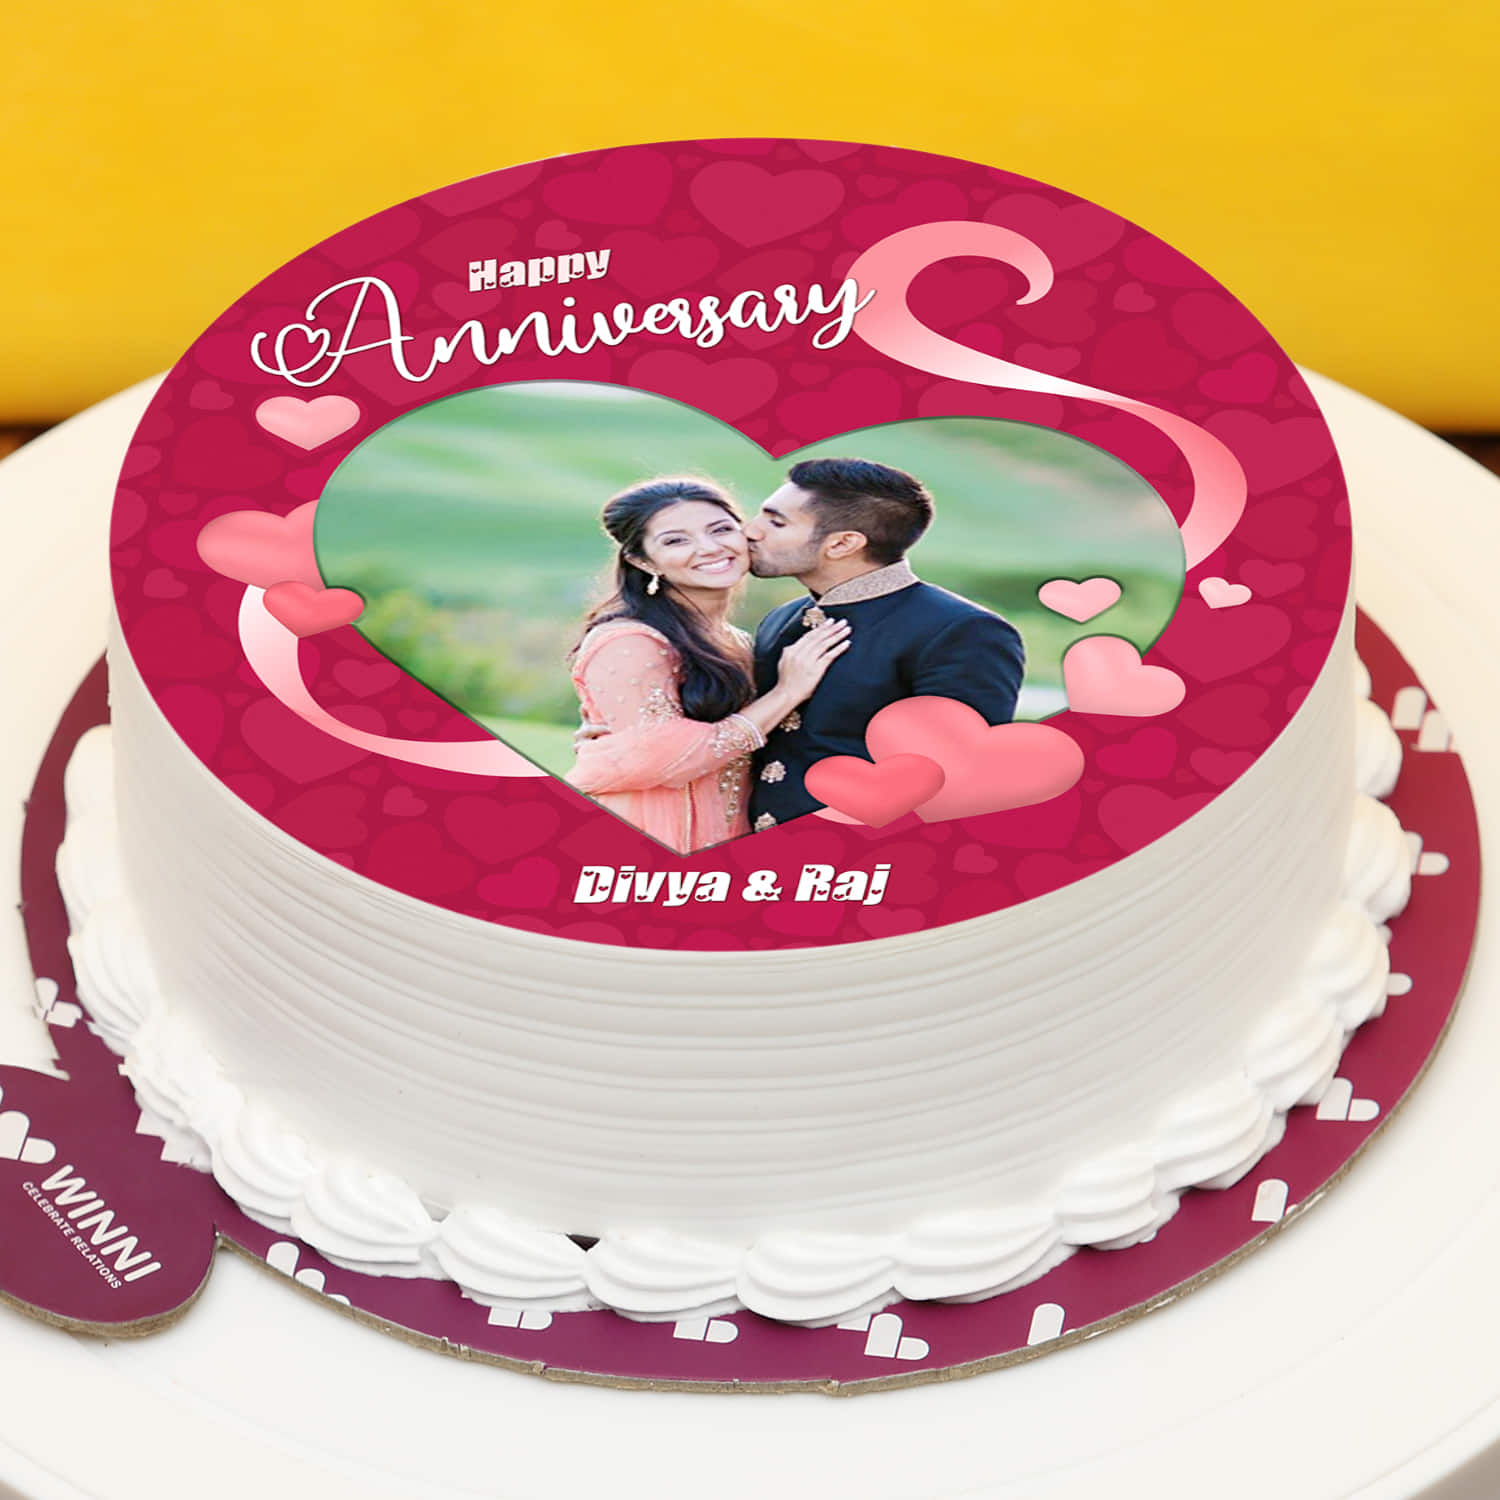 Be Mine Forever Cake 600 gm : Gift/Send Valentine's Day Gifts Online  JVS1200068 |IGP.com